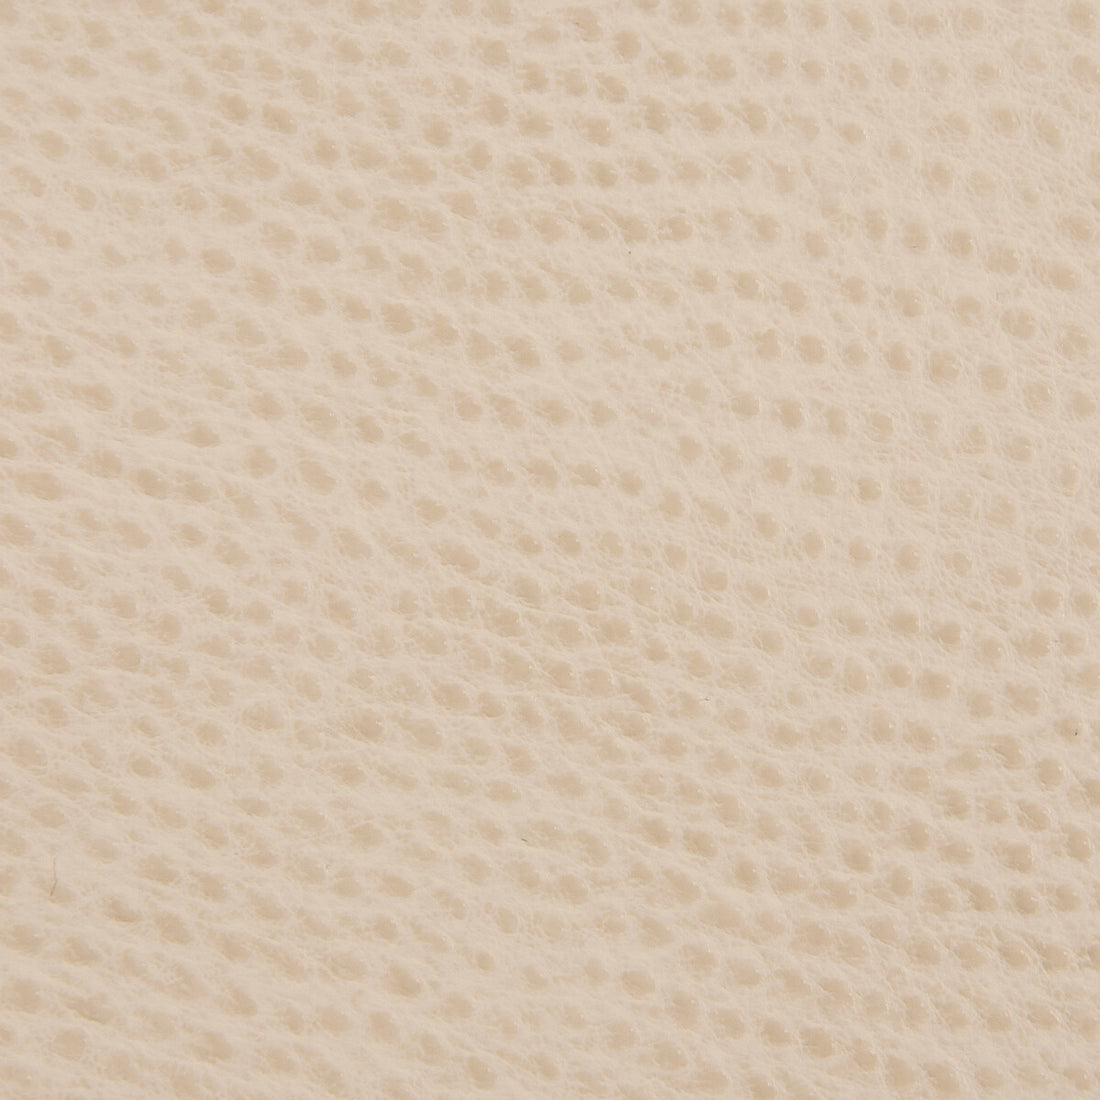 Kravet Contract fabric in belus-16 color - pattern BELUS.16.0 - by Kravet Contract